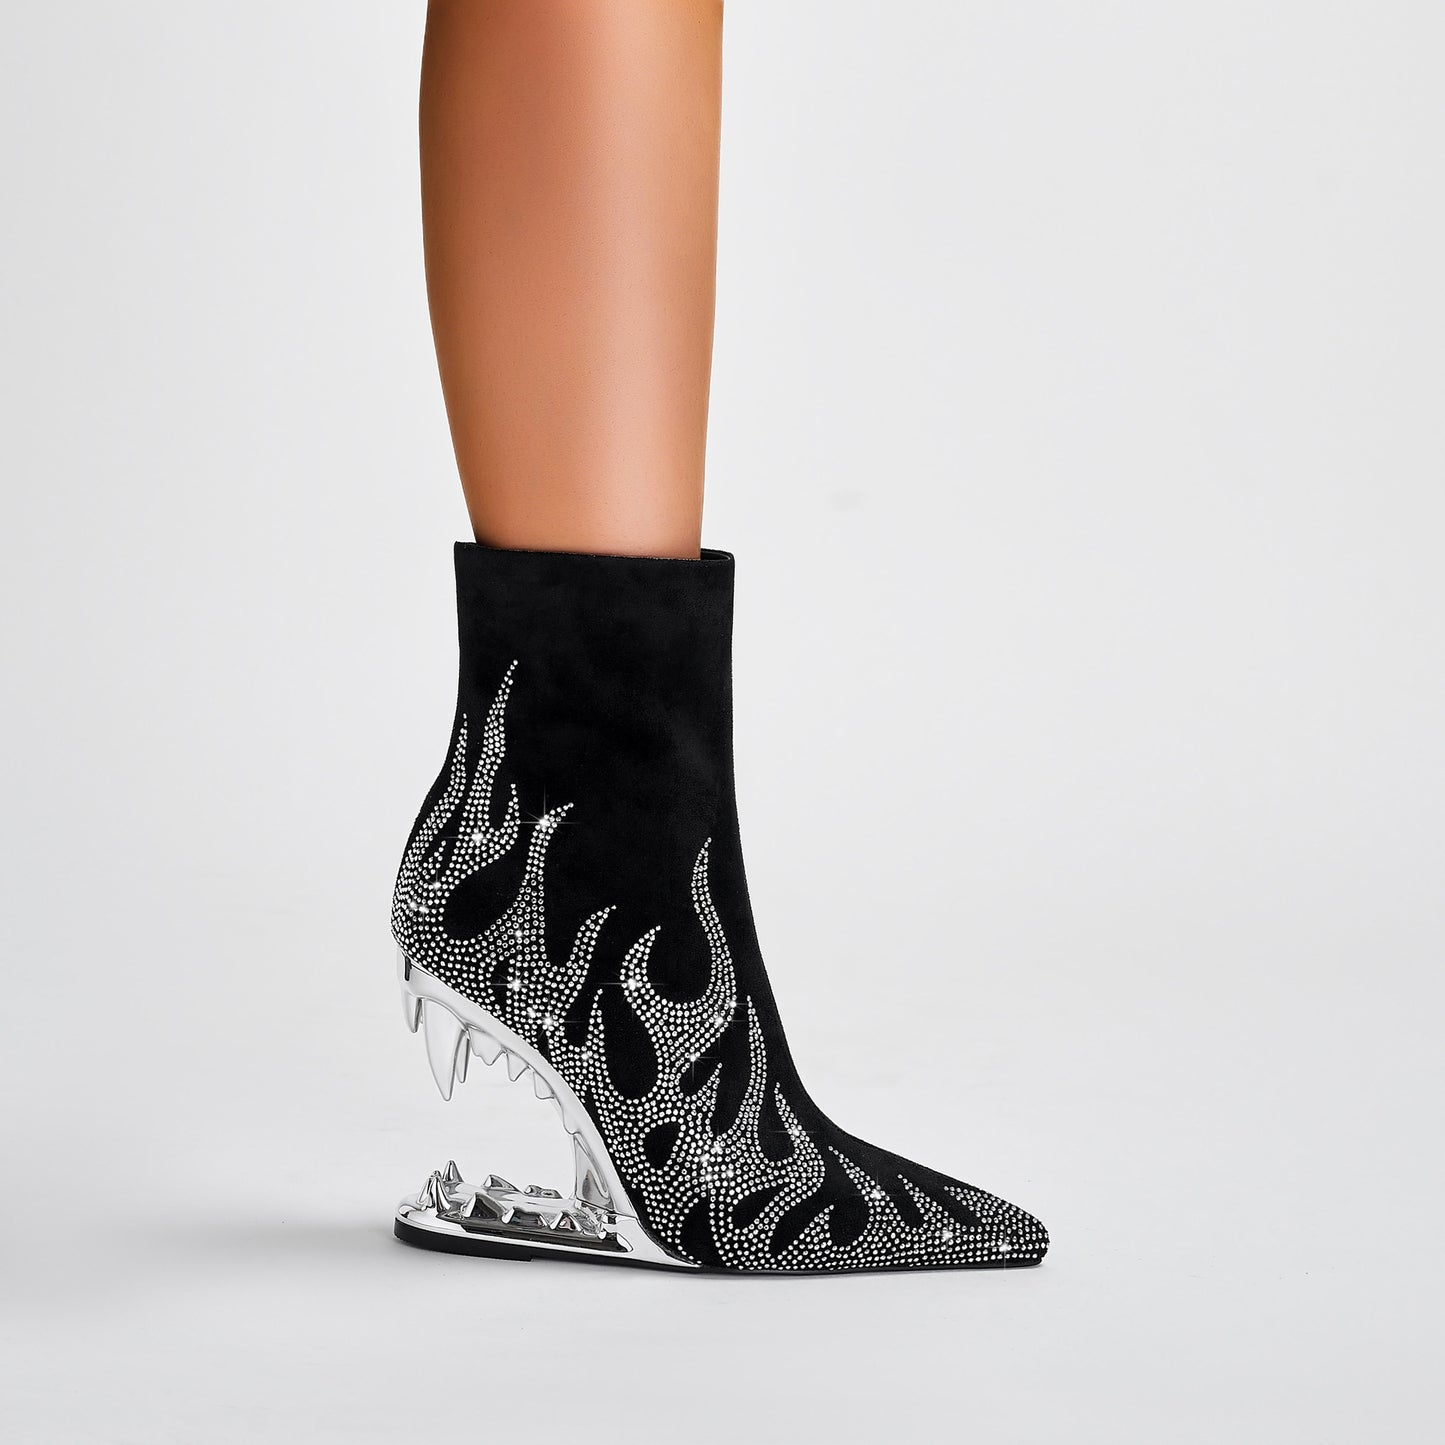 Teeth Profiled Heel, Womens High Heel Rhinestone Ankle Boots